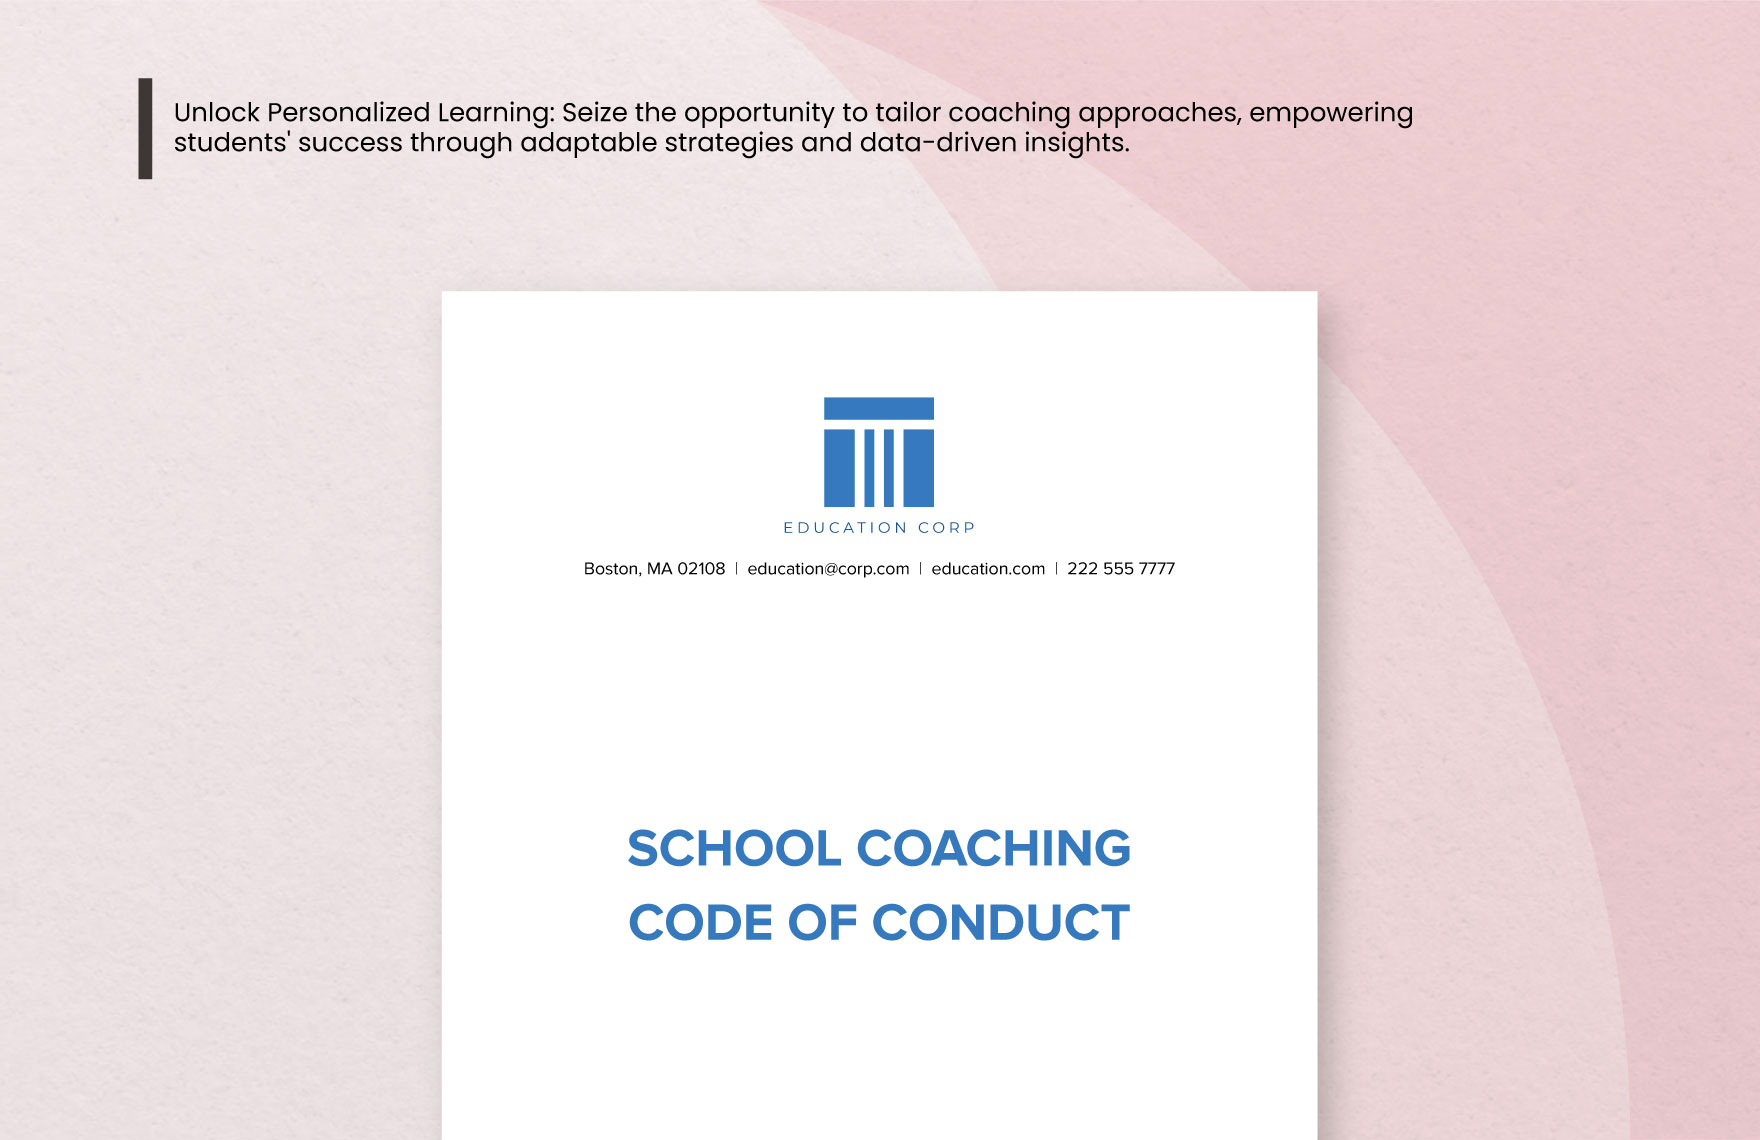 School Coaching Code of Conduct Template